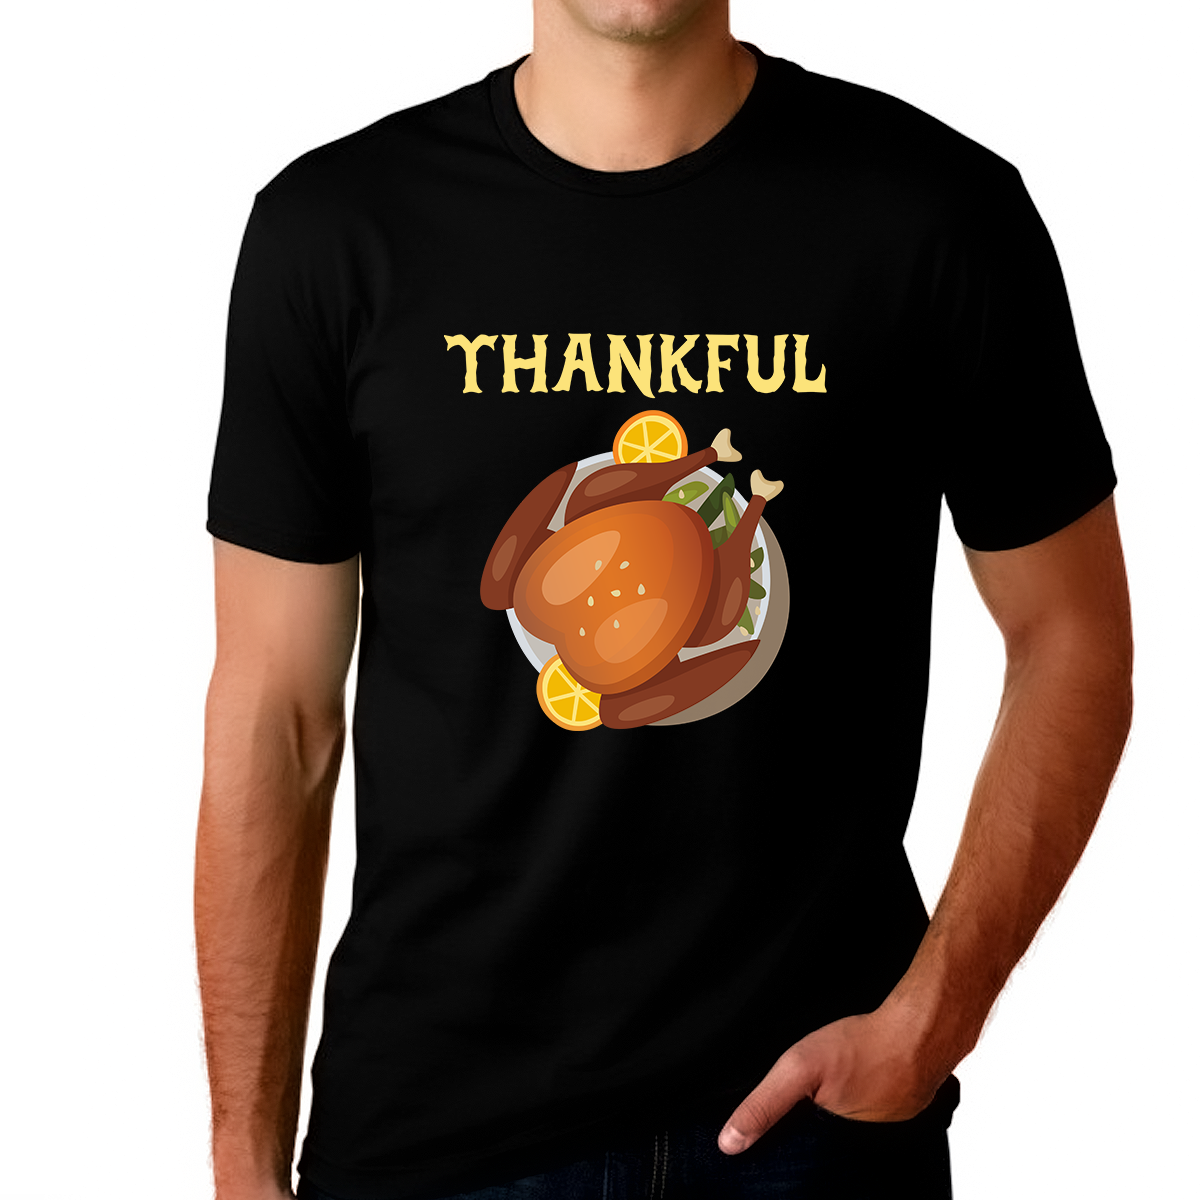 Funny Thanksgiving Shirts for Men Thanksgiving Outfit Cool Thanksgiving Shirt Funny Family Dinner Shirt